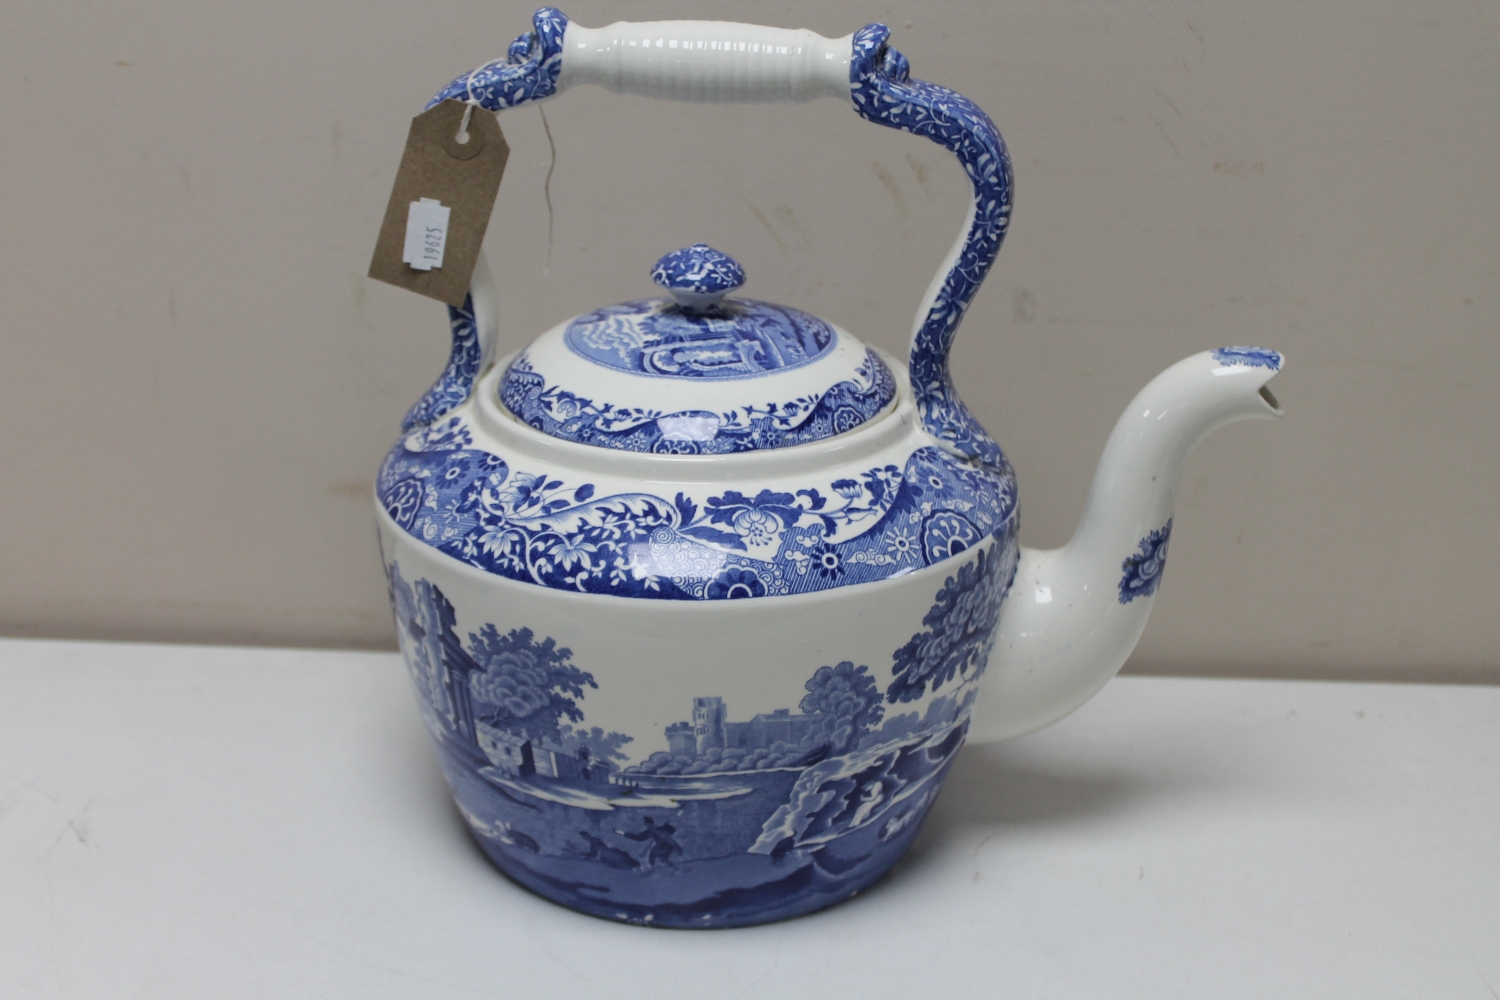 A large Copeland Spode Italian china teapot